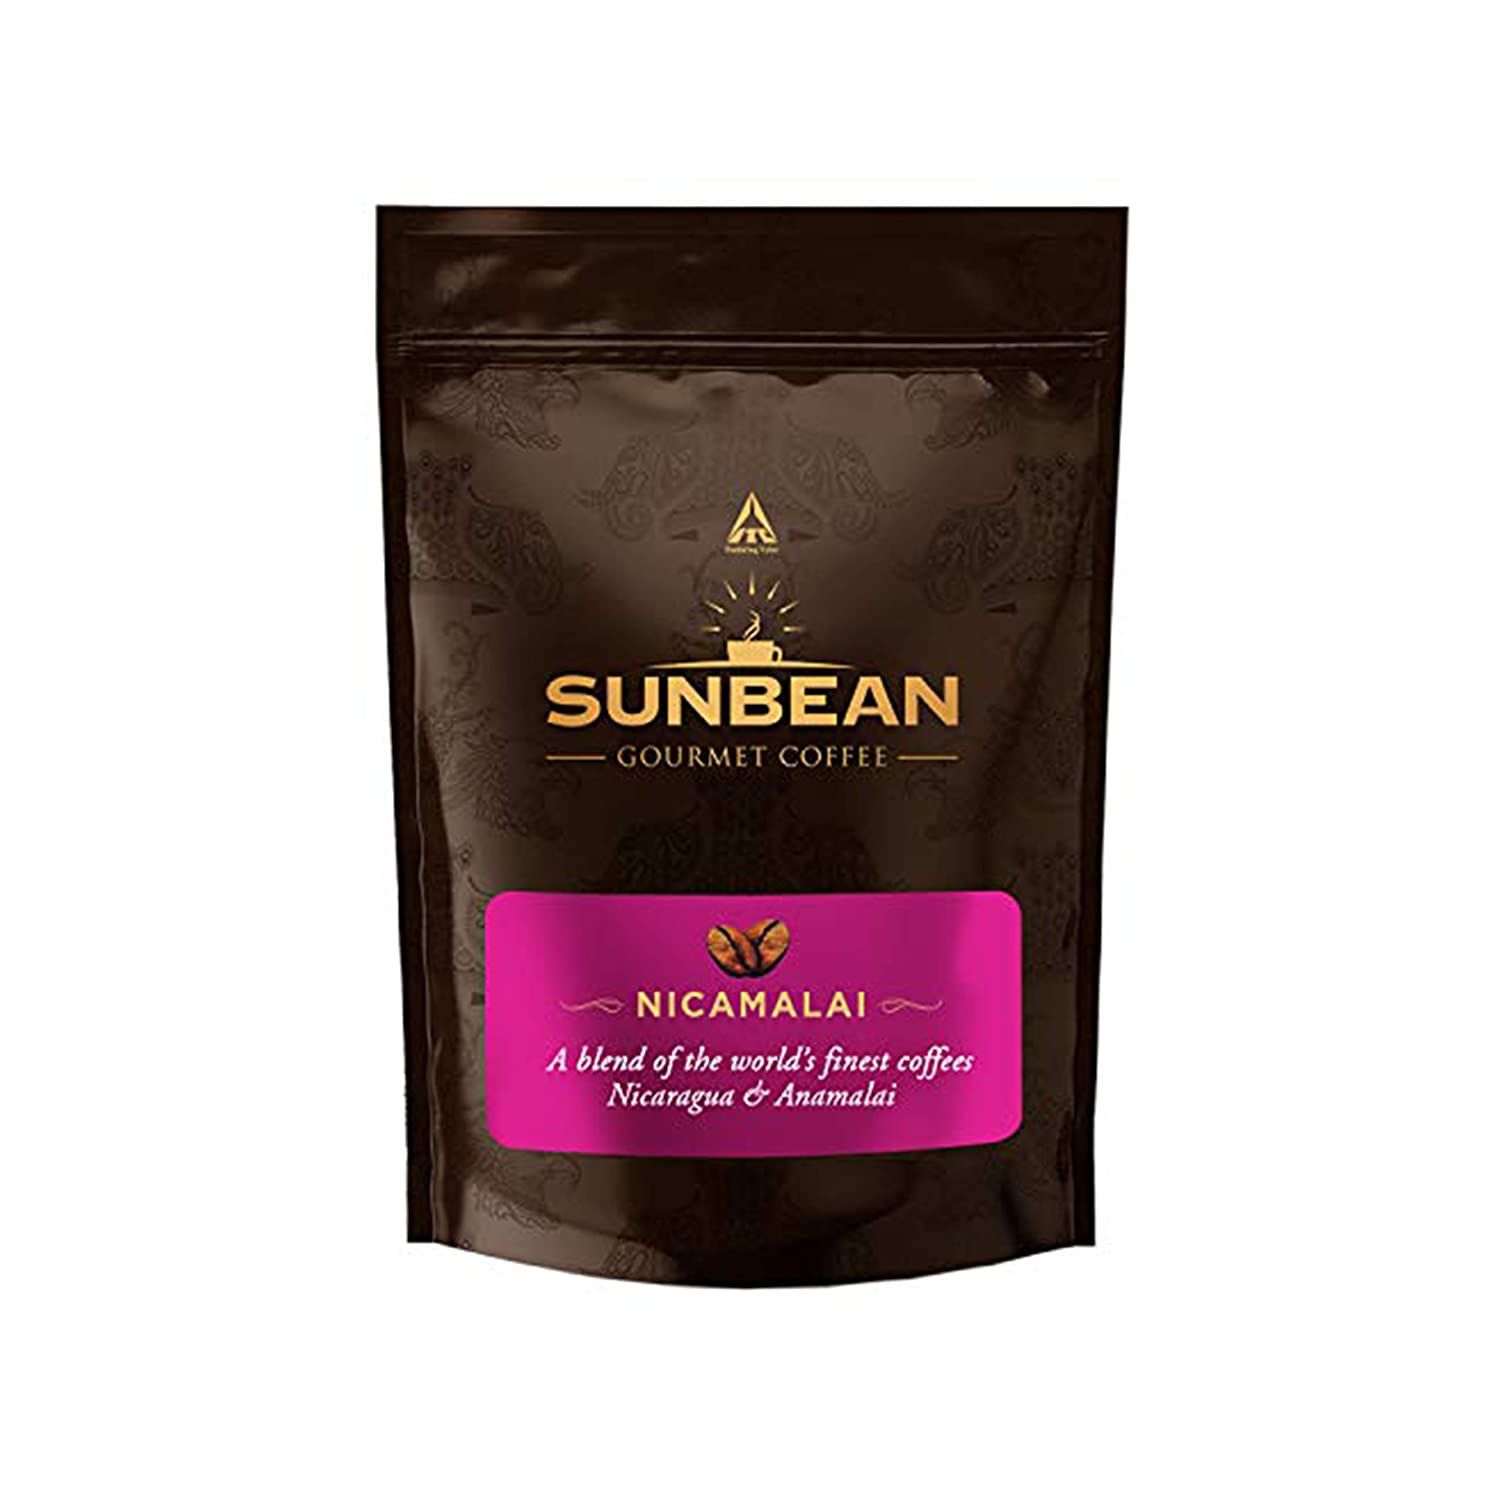 Sunbean Gourmet Coffee Nicamalai Roasted & Ground Coffee Powder Image